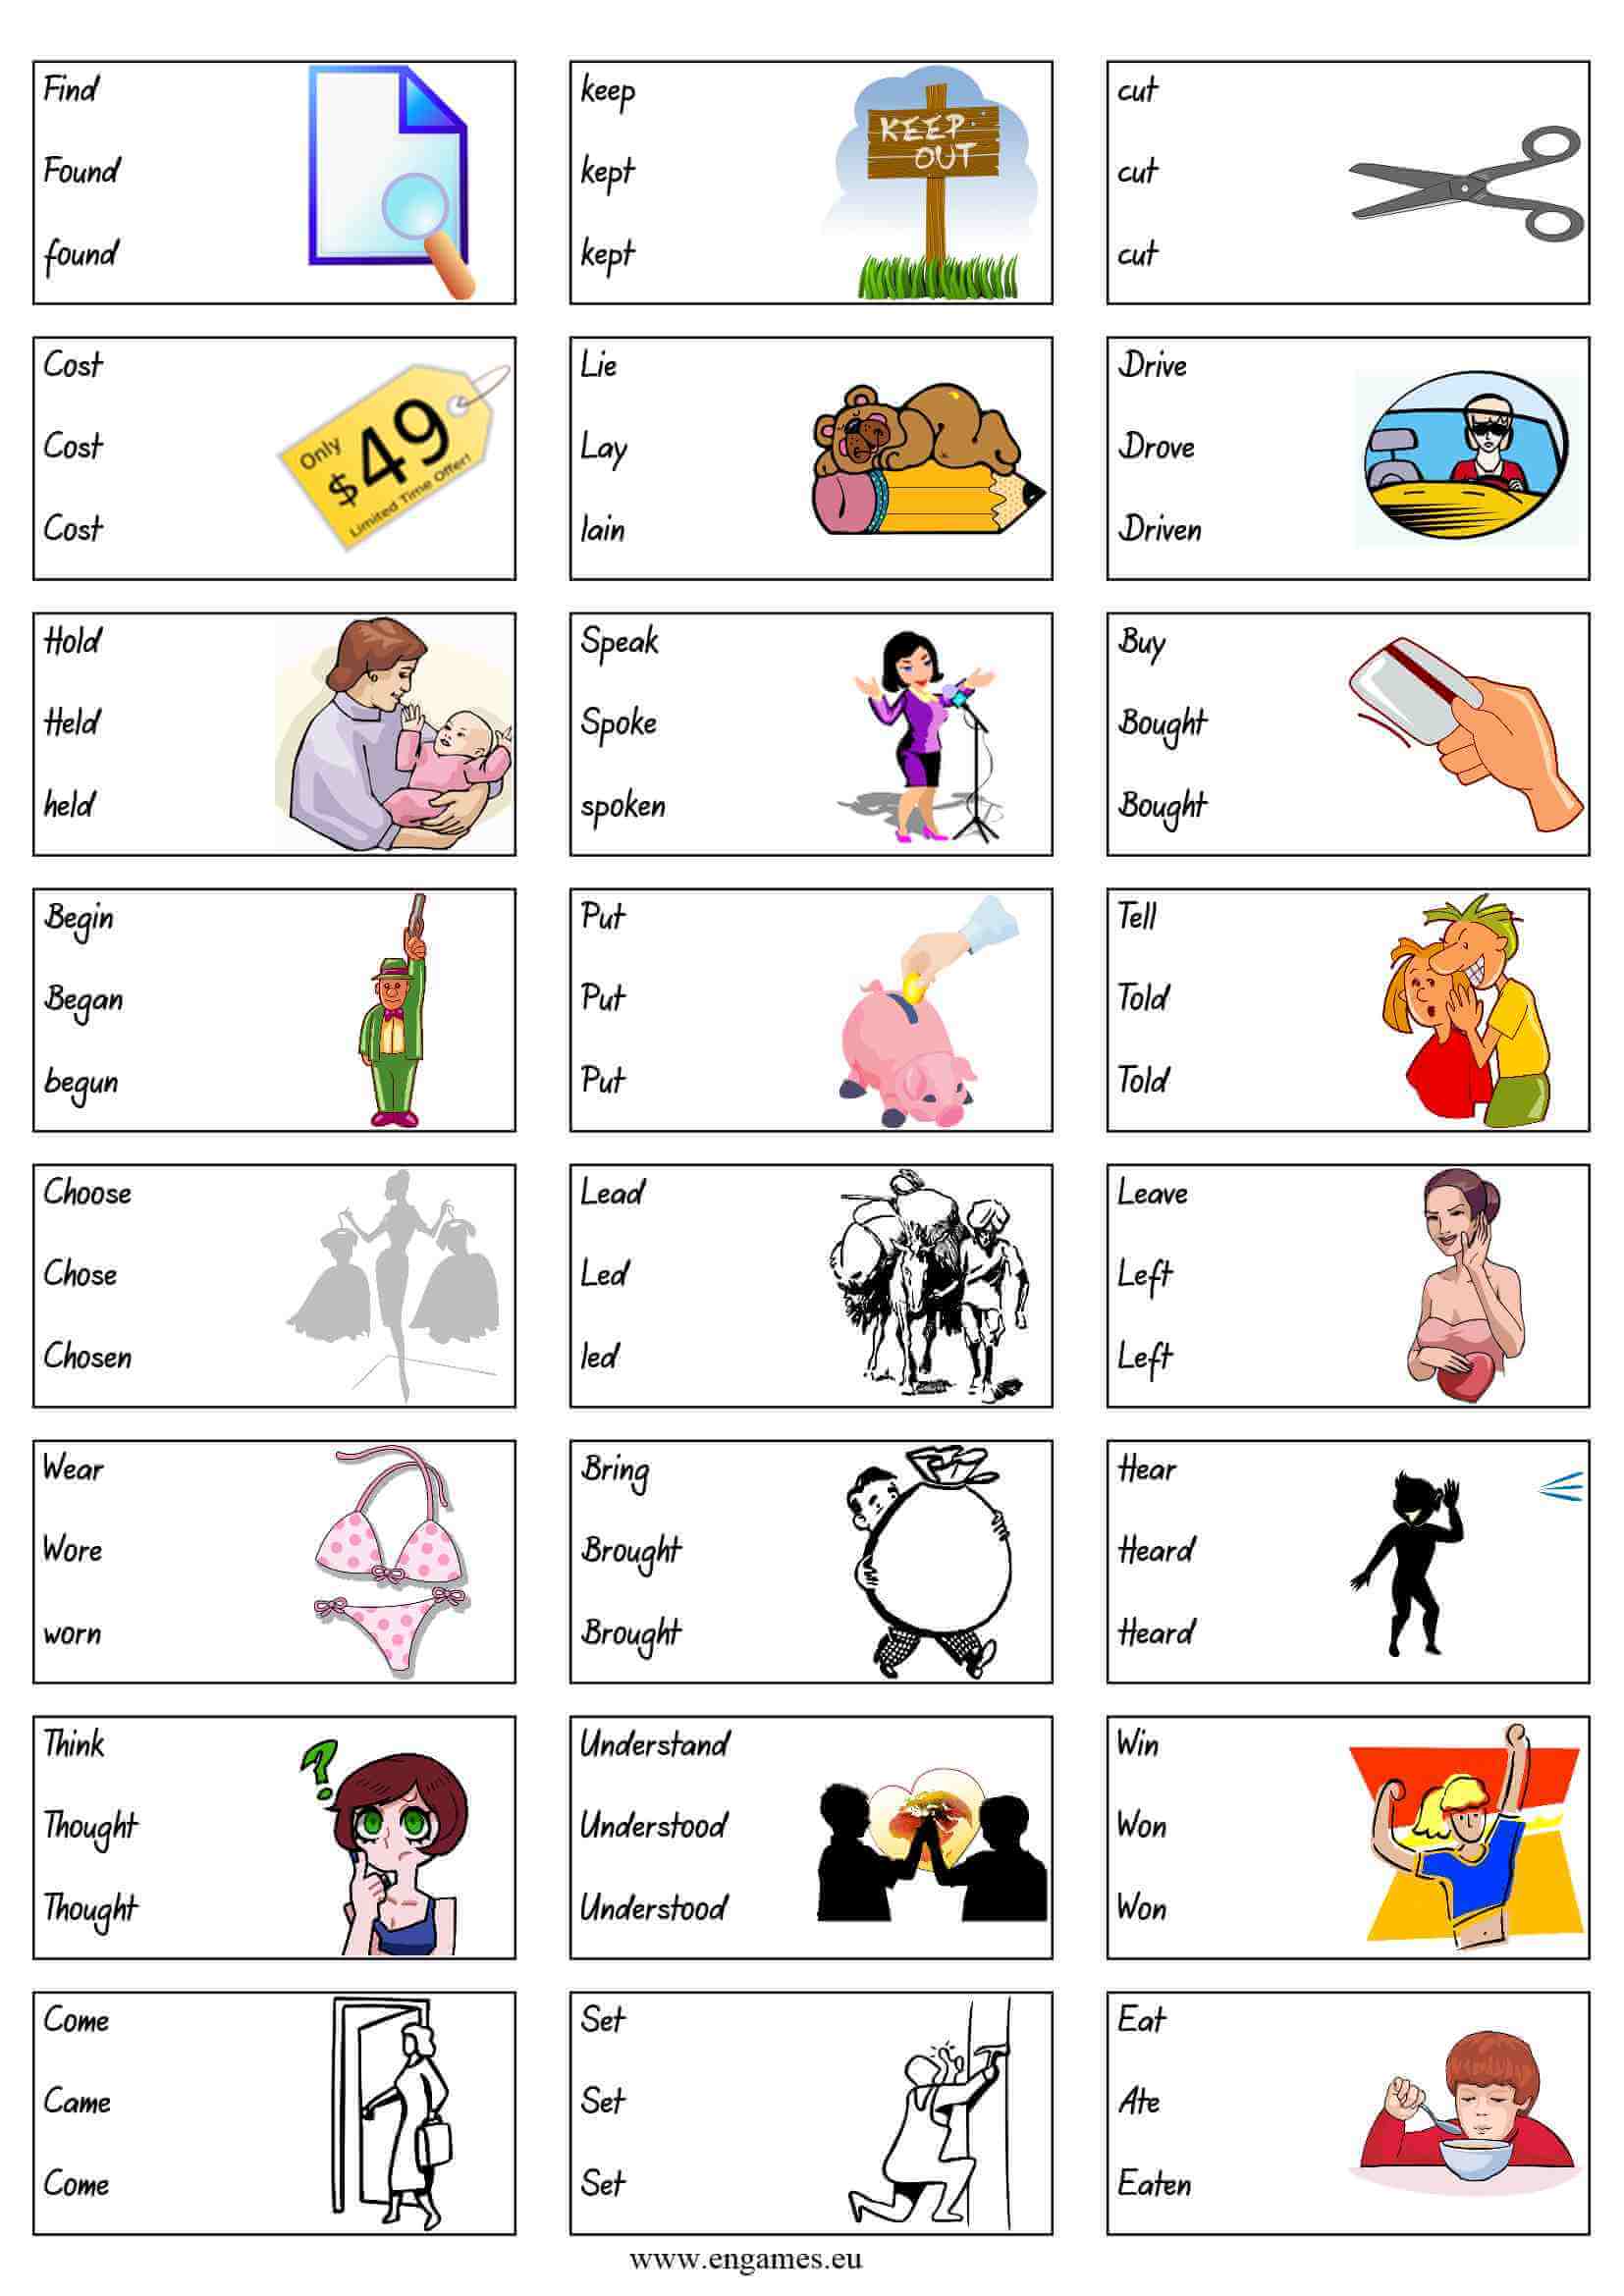 irregular-verbs-worksheets-free-download-99worksheets